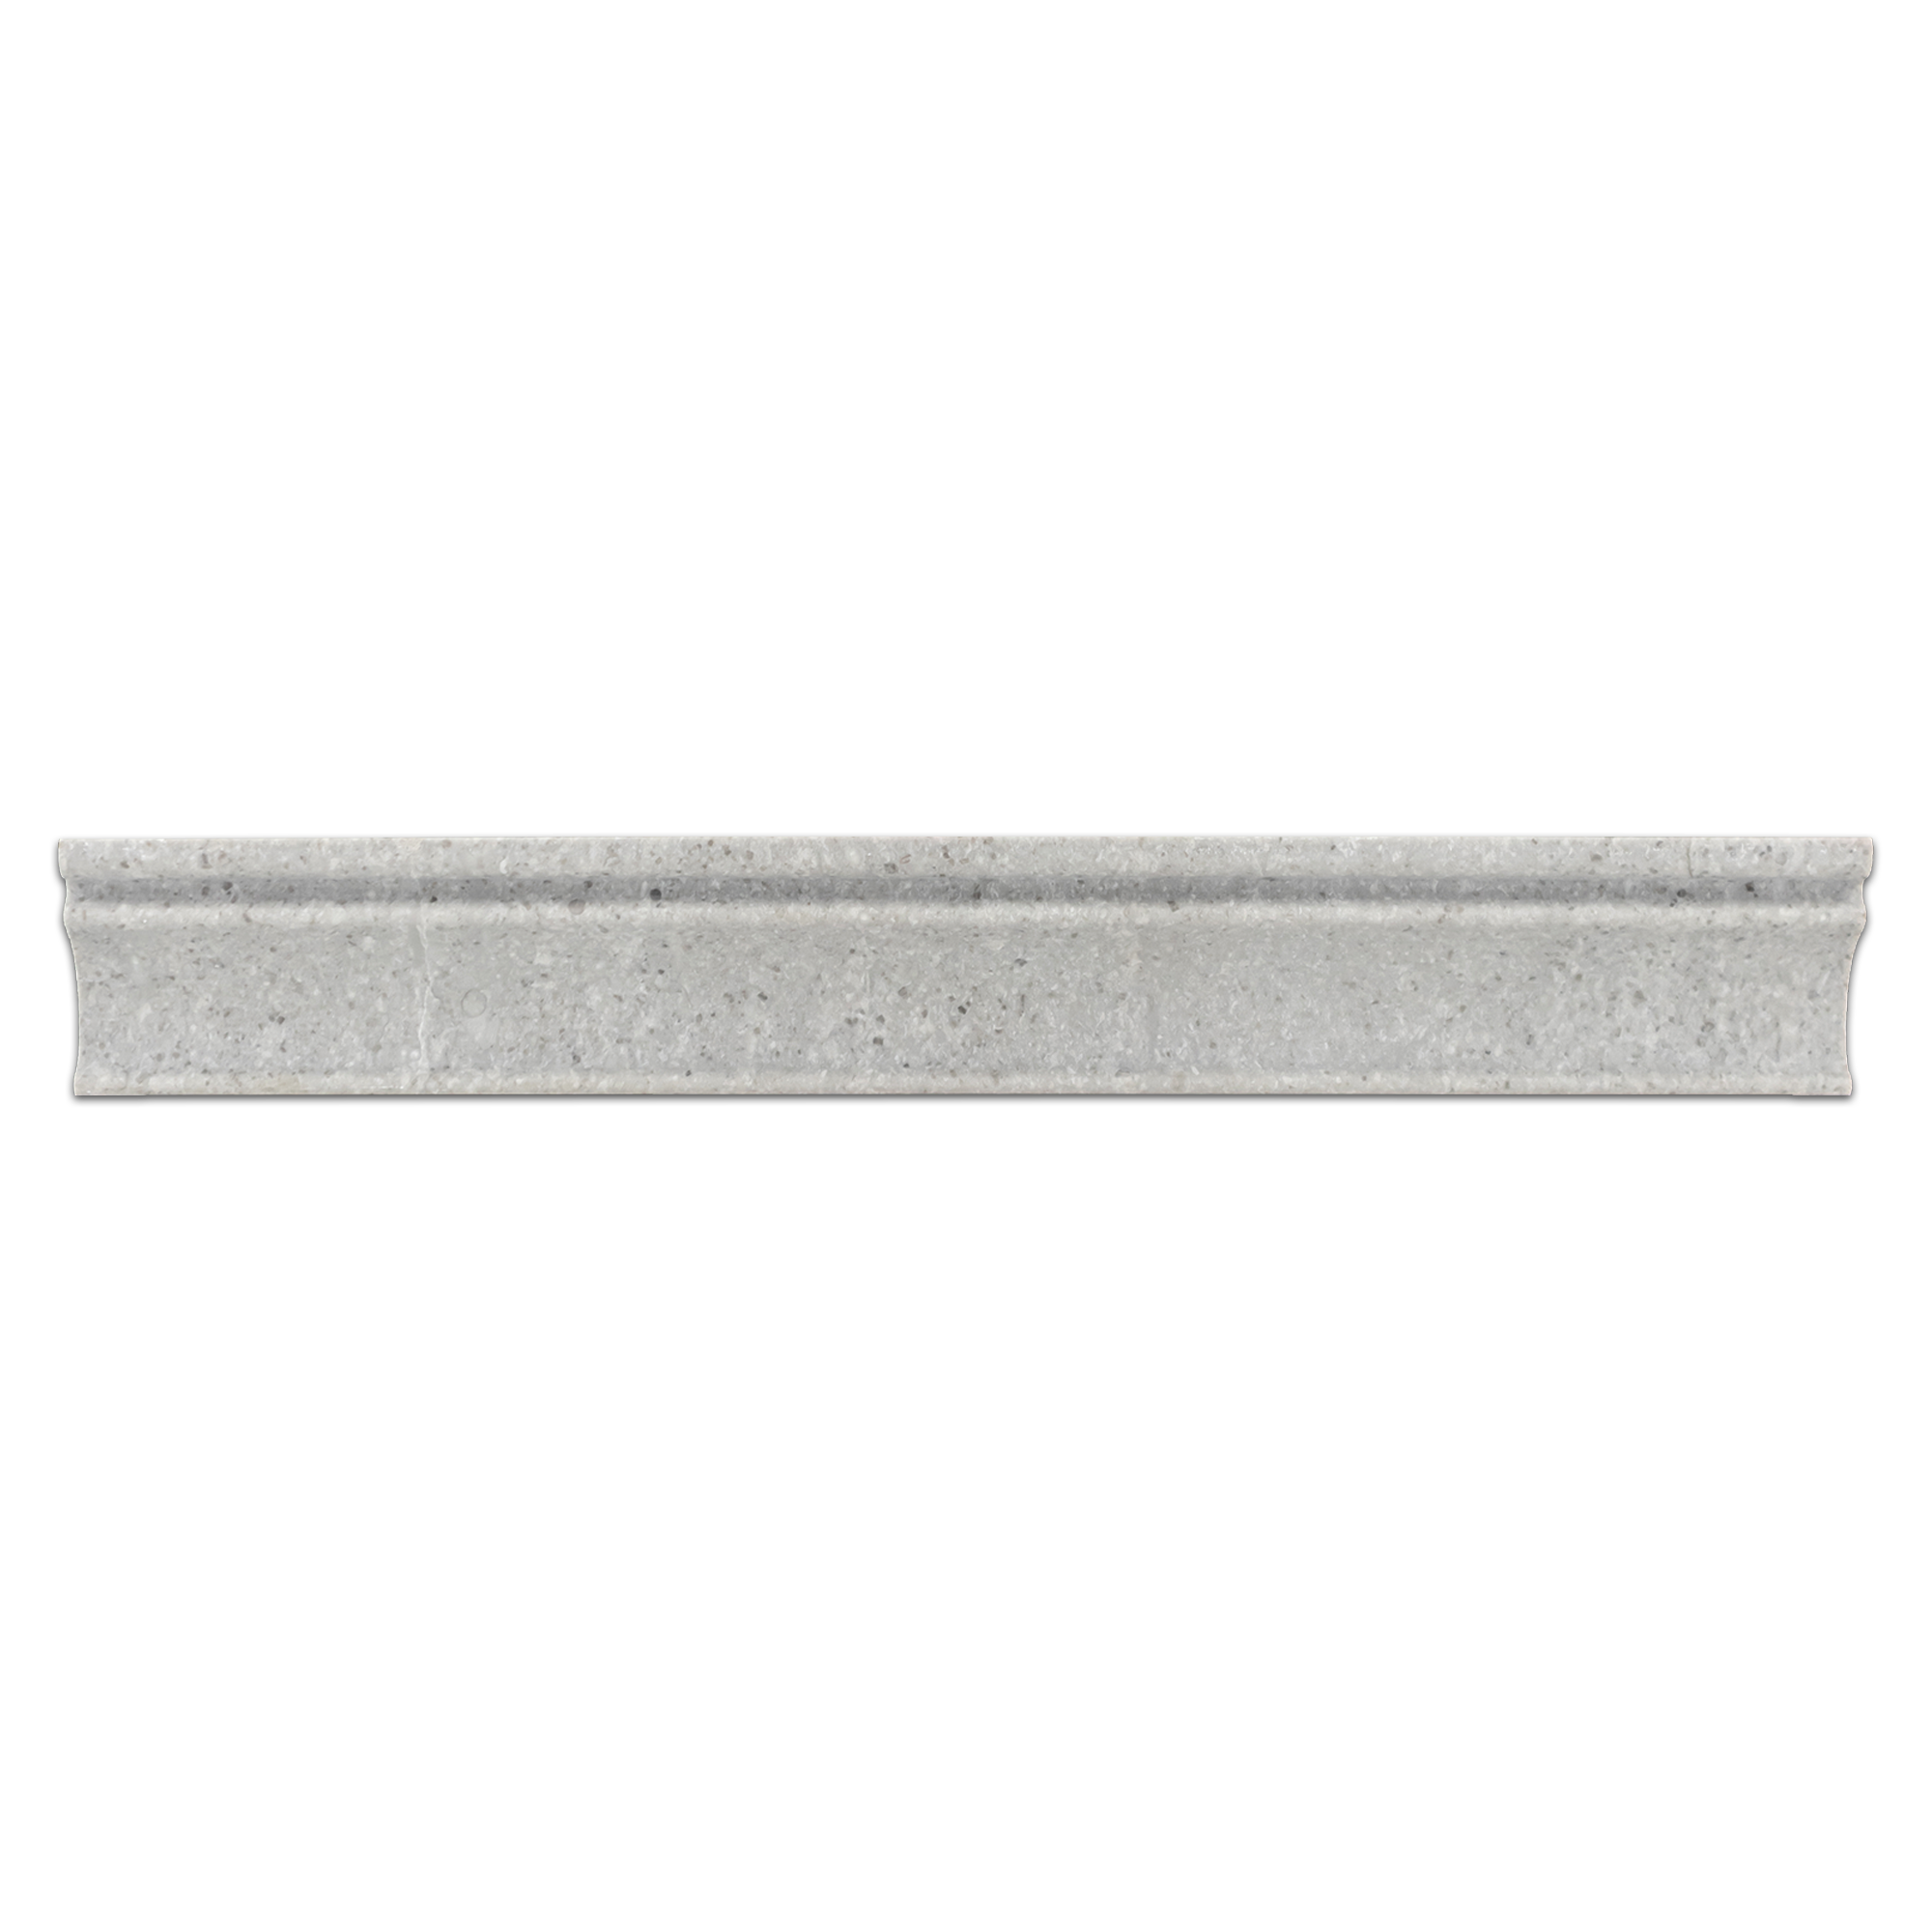 Elon Sand Dollar Marble Crown 2x12 Honed Tile - Surface Group Online Tile Store